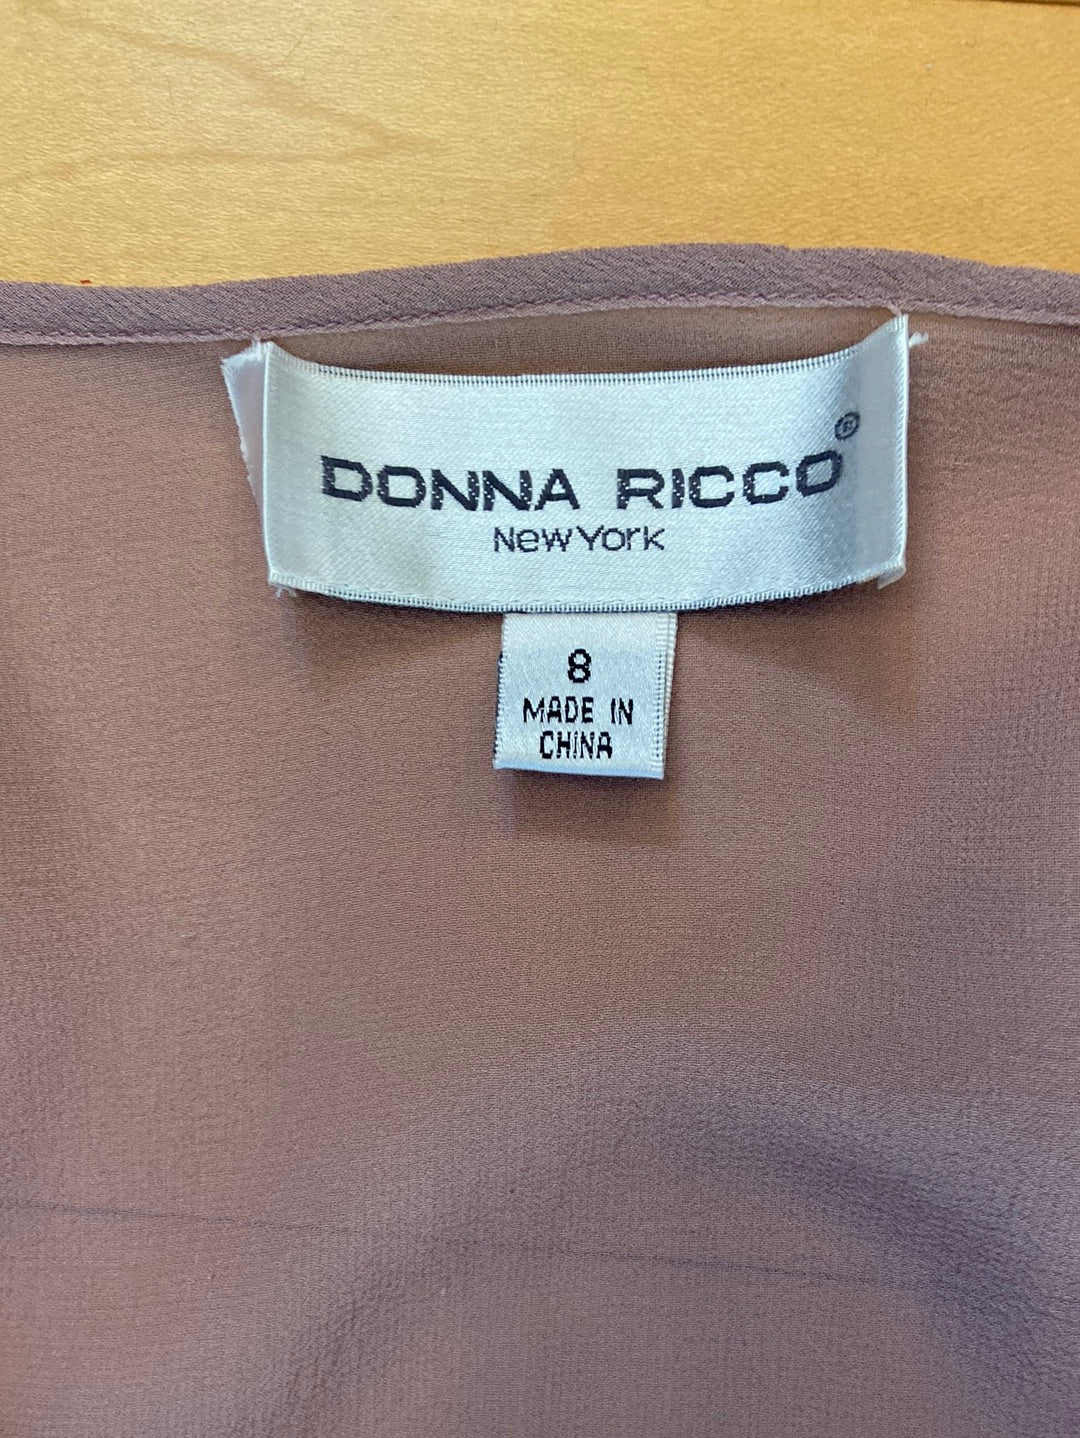 ROSE LACE Donna Ricco Size 8